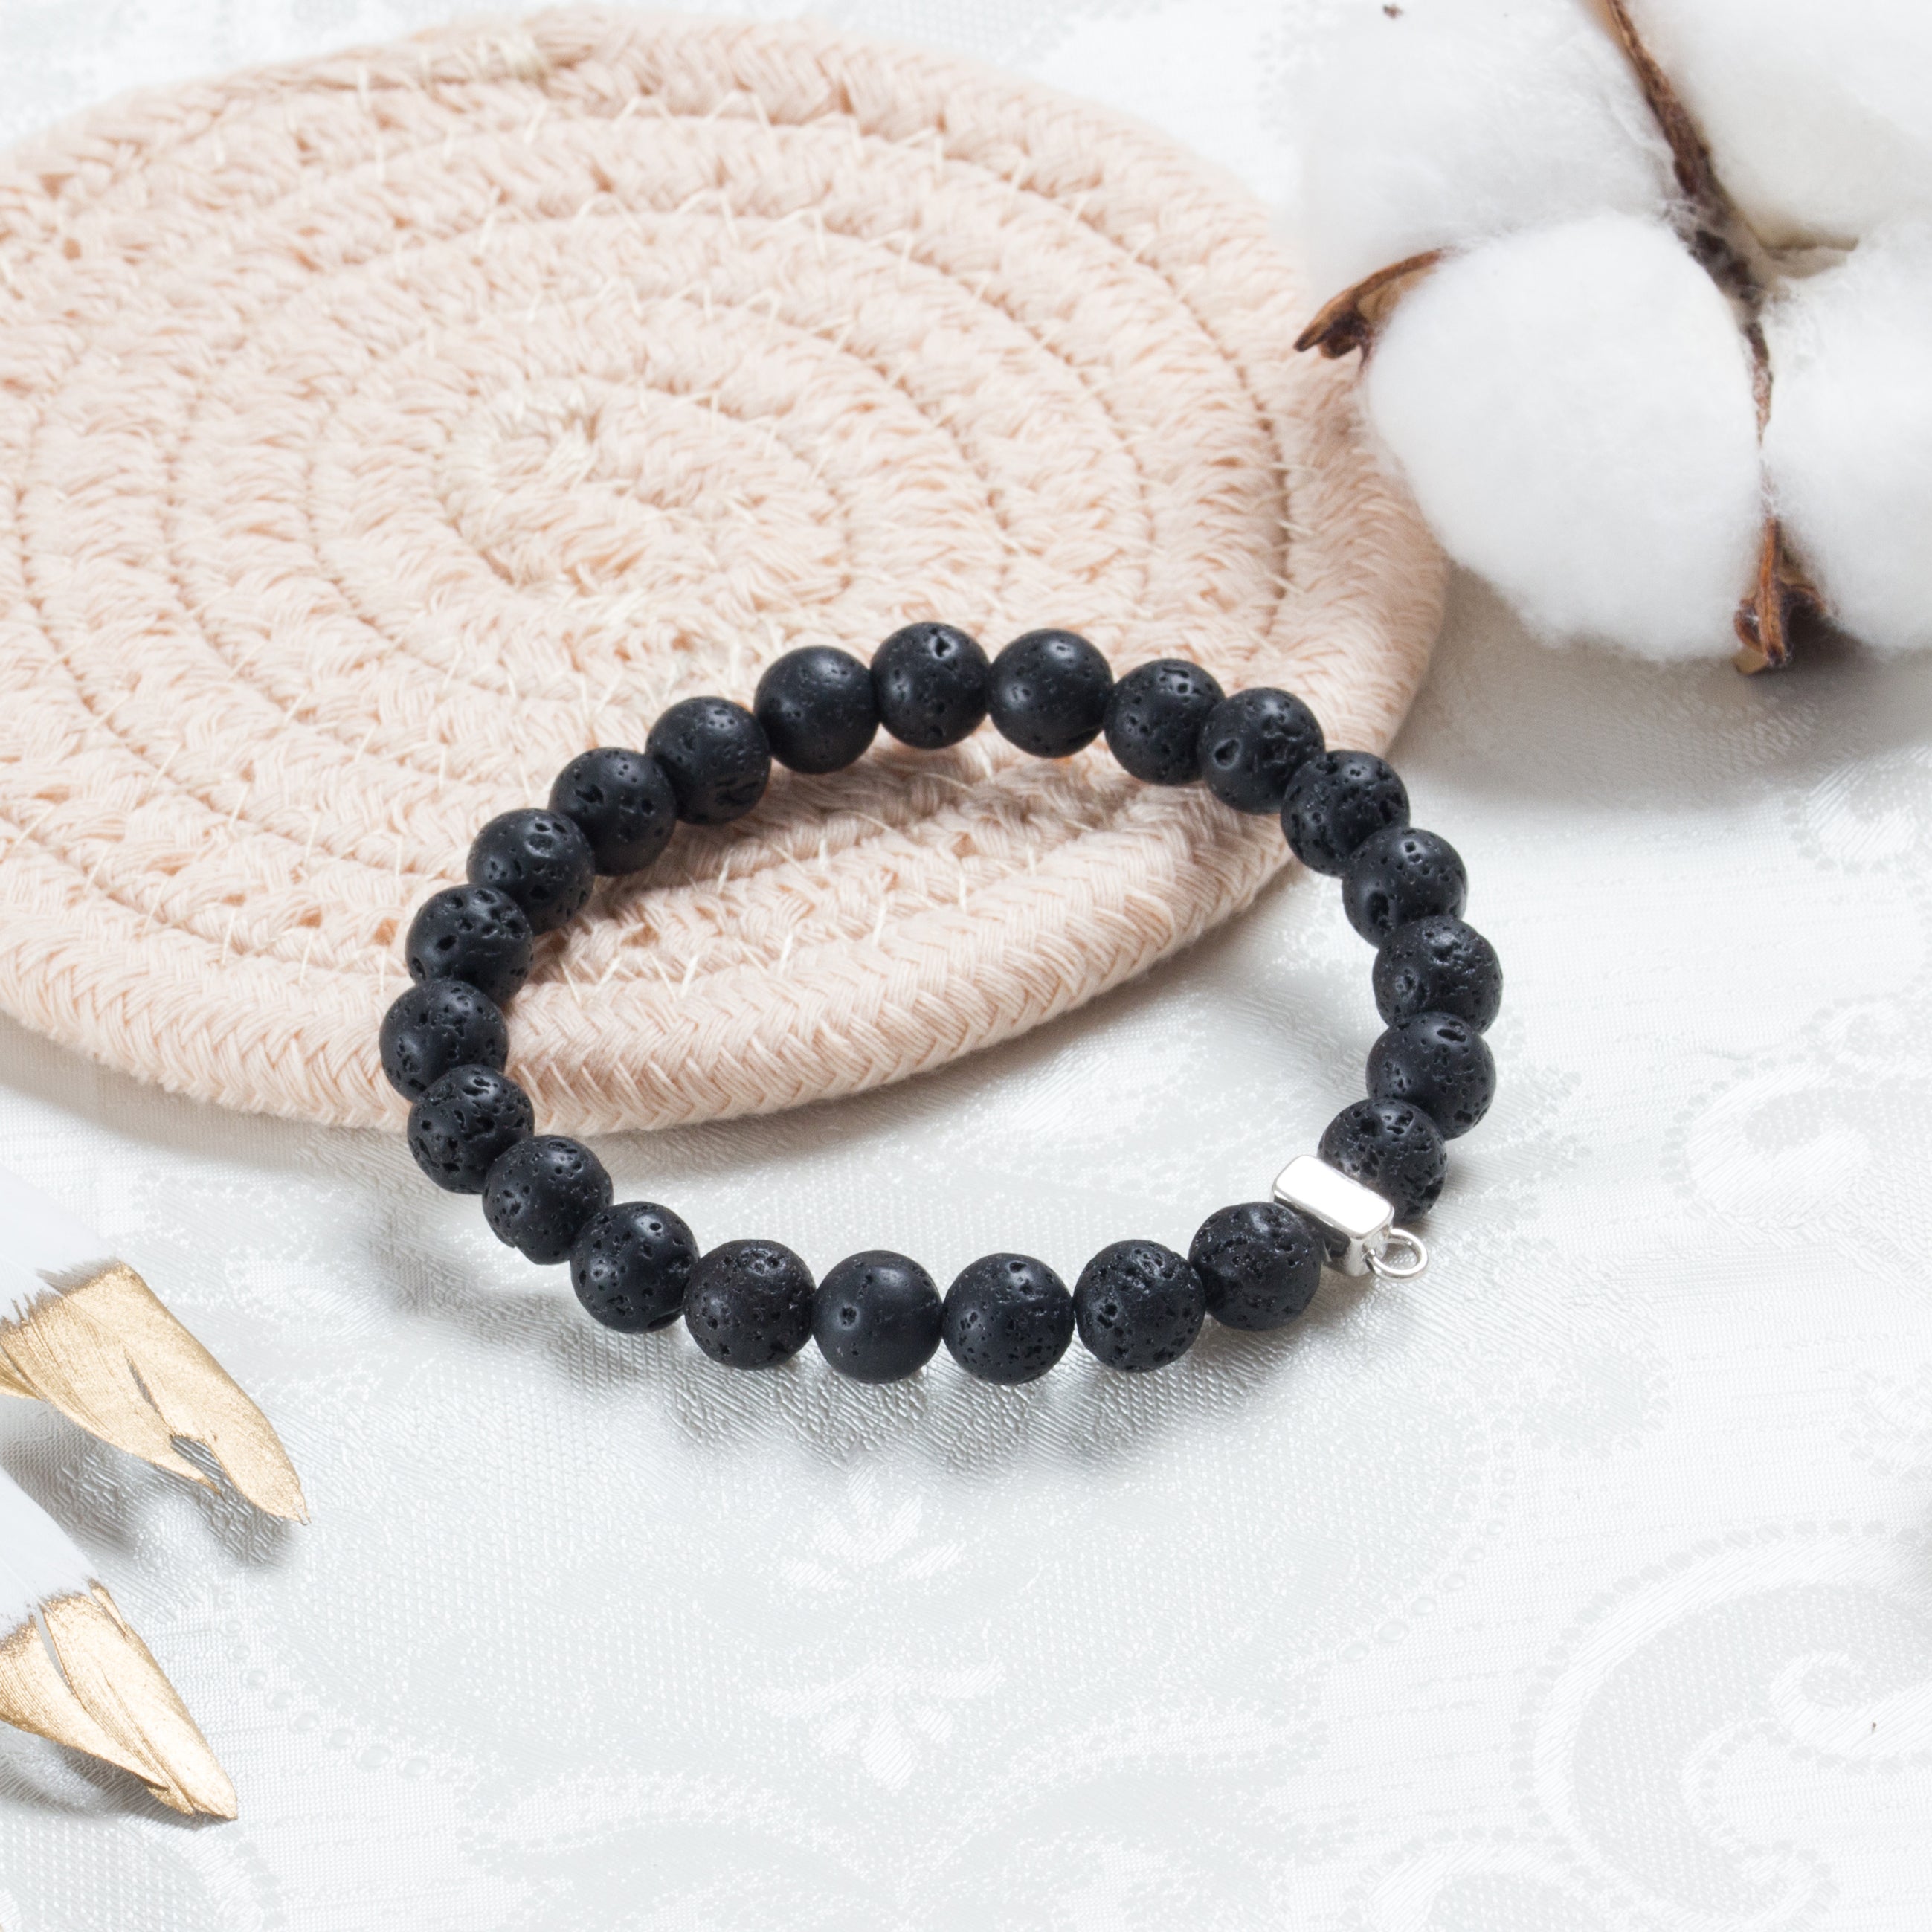 Lava Rock Gemstone Stretch Bracelet with Charm Created with Zircondia® Crystals